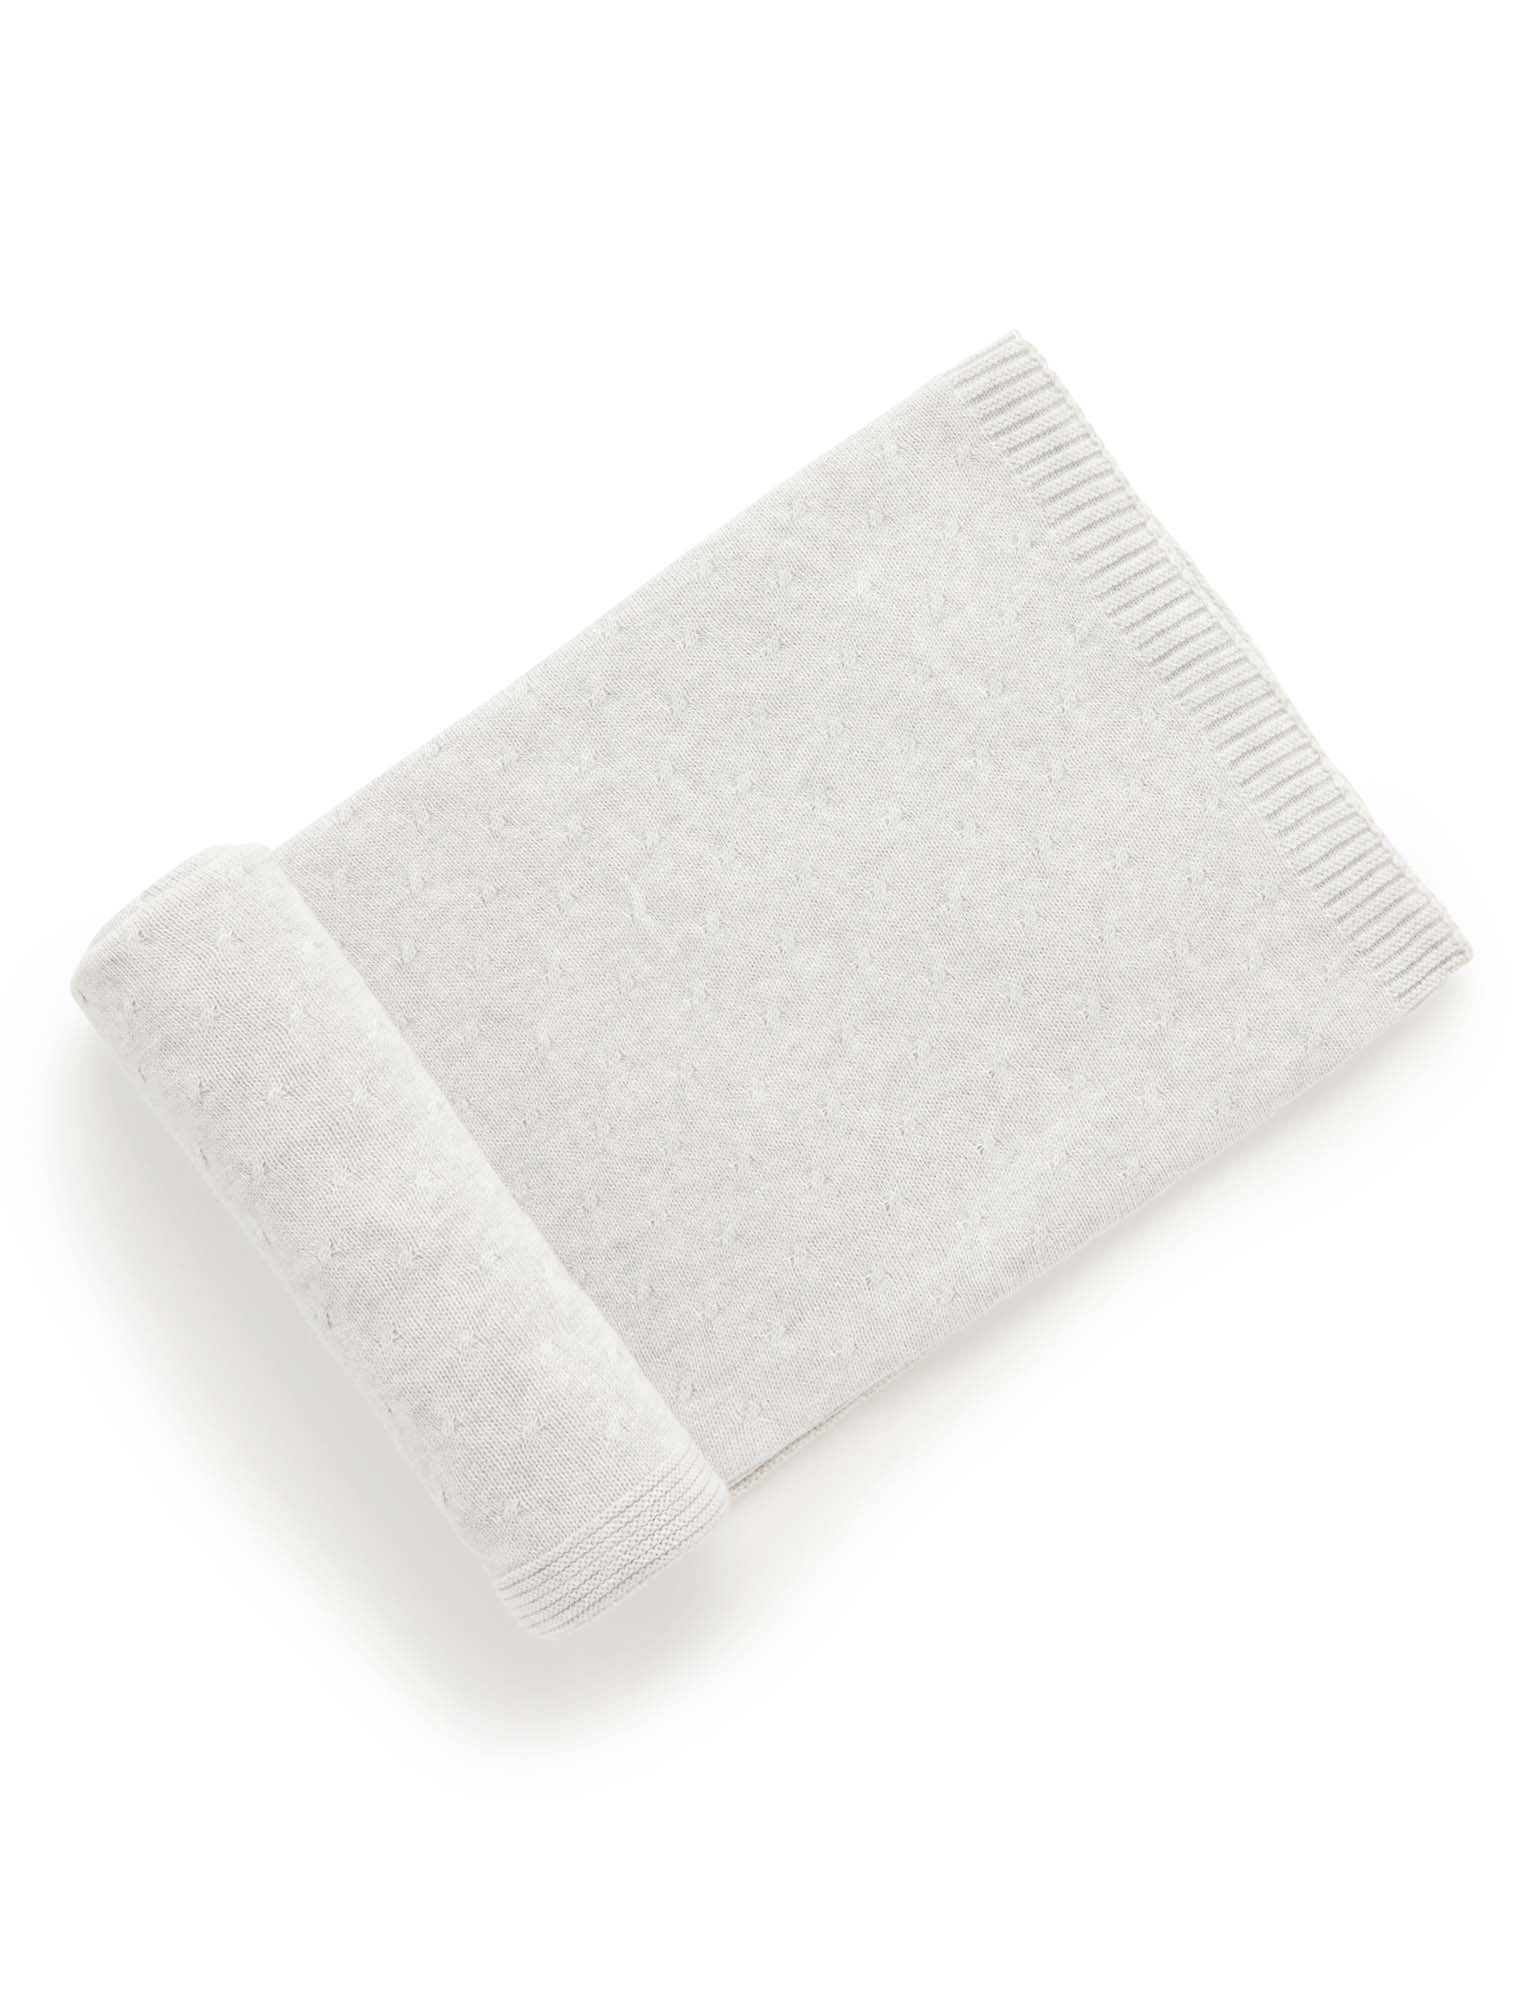 Purebaby 100% Organic Cotton Blanket